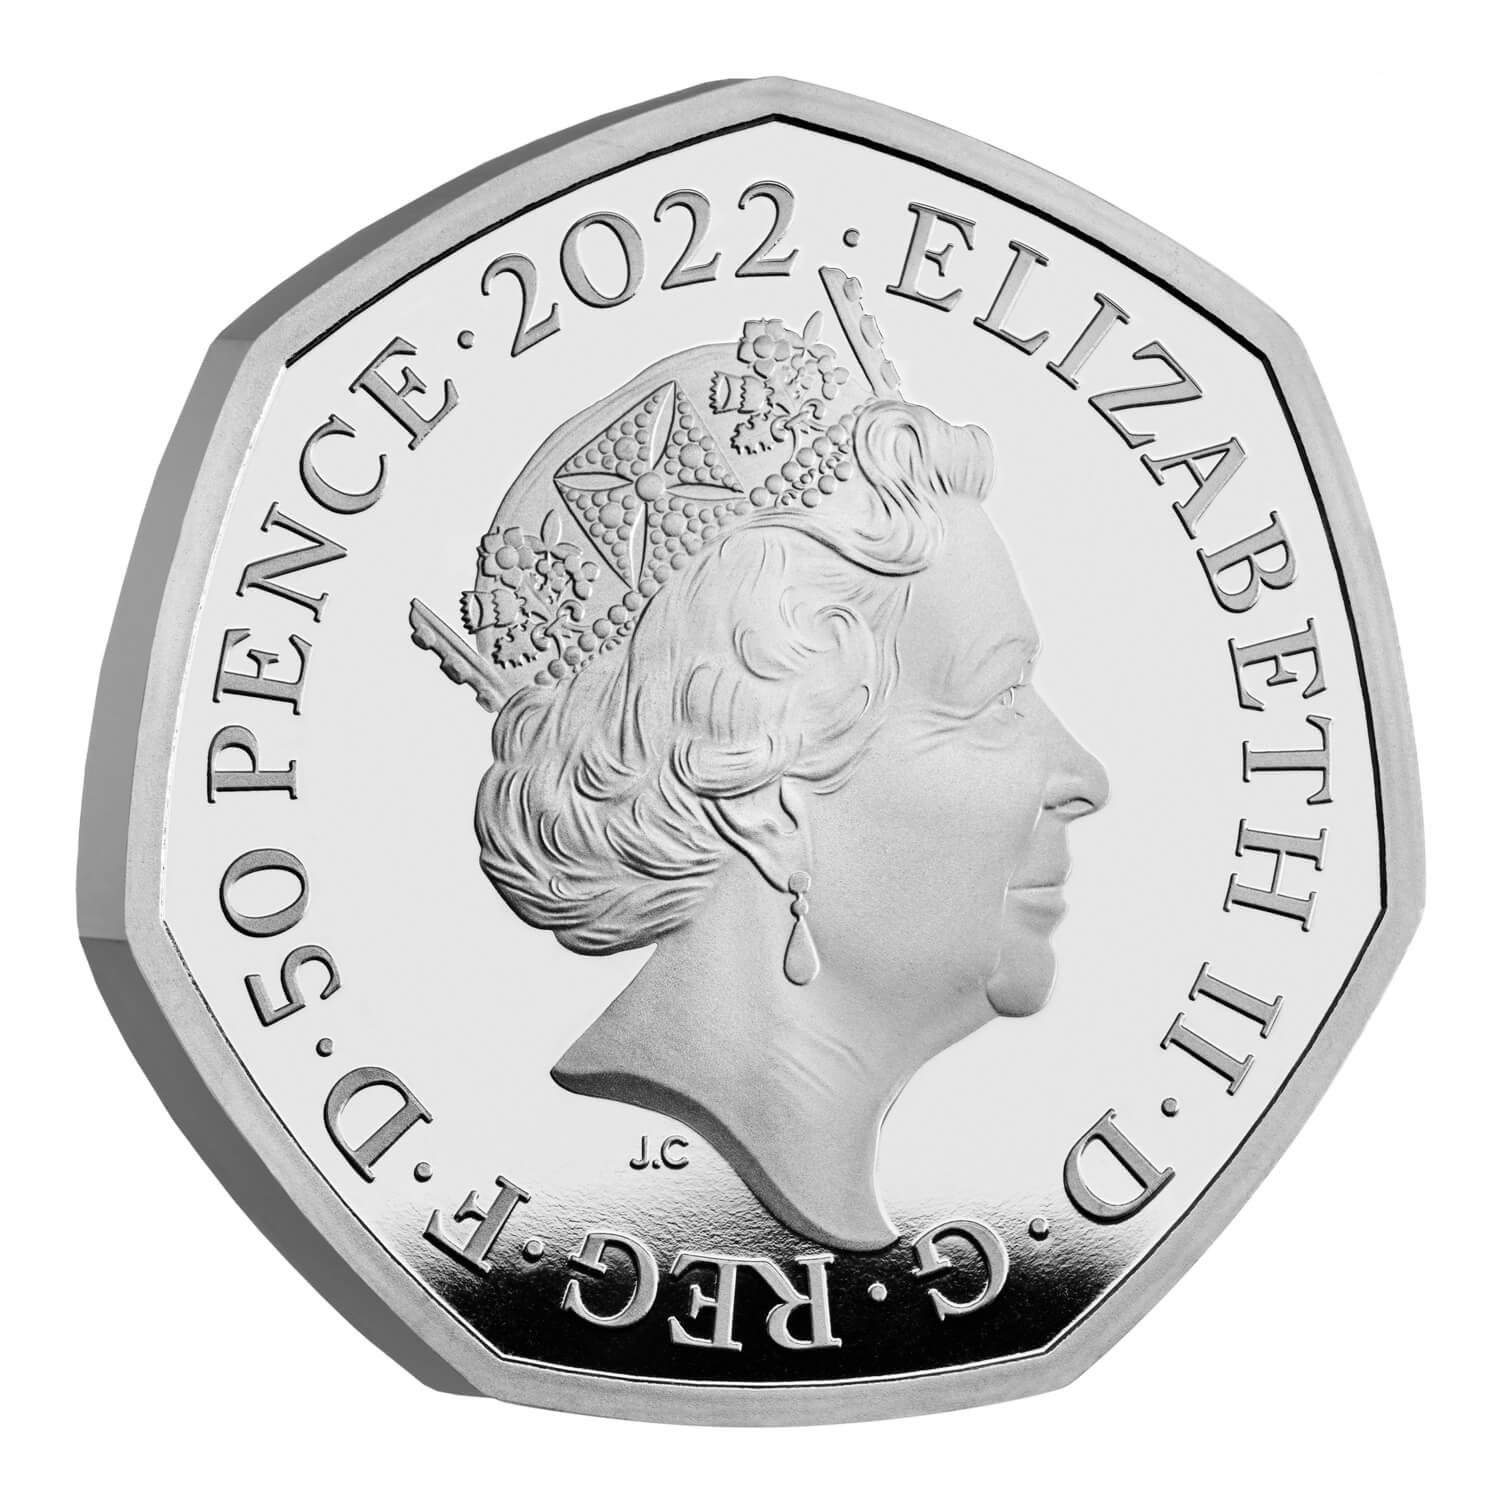 (W185.50.P.2022.UK22HPSP) United Kingdom 50 Pence Harry Potter 2022 - Proof silver Obverse (zoom)